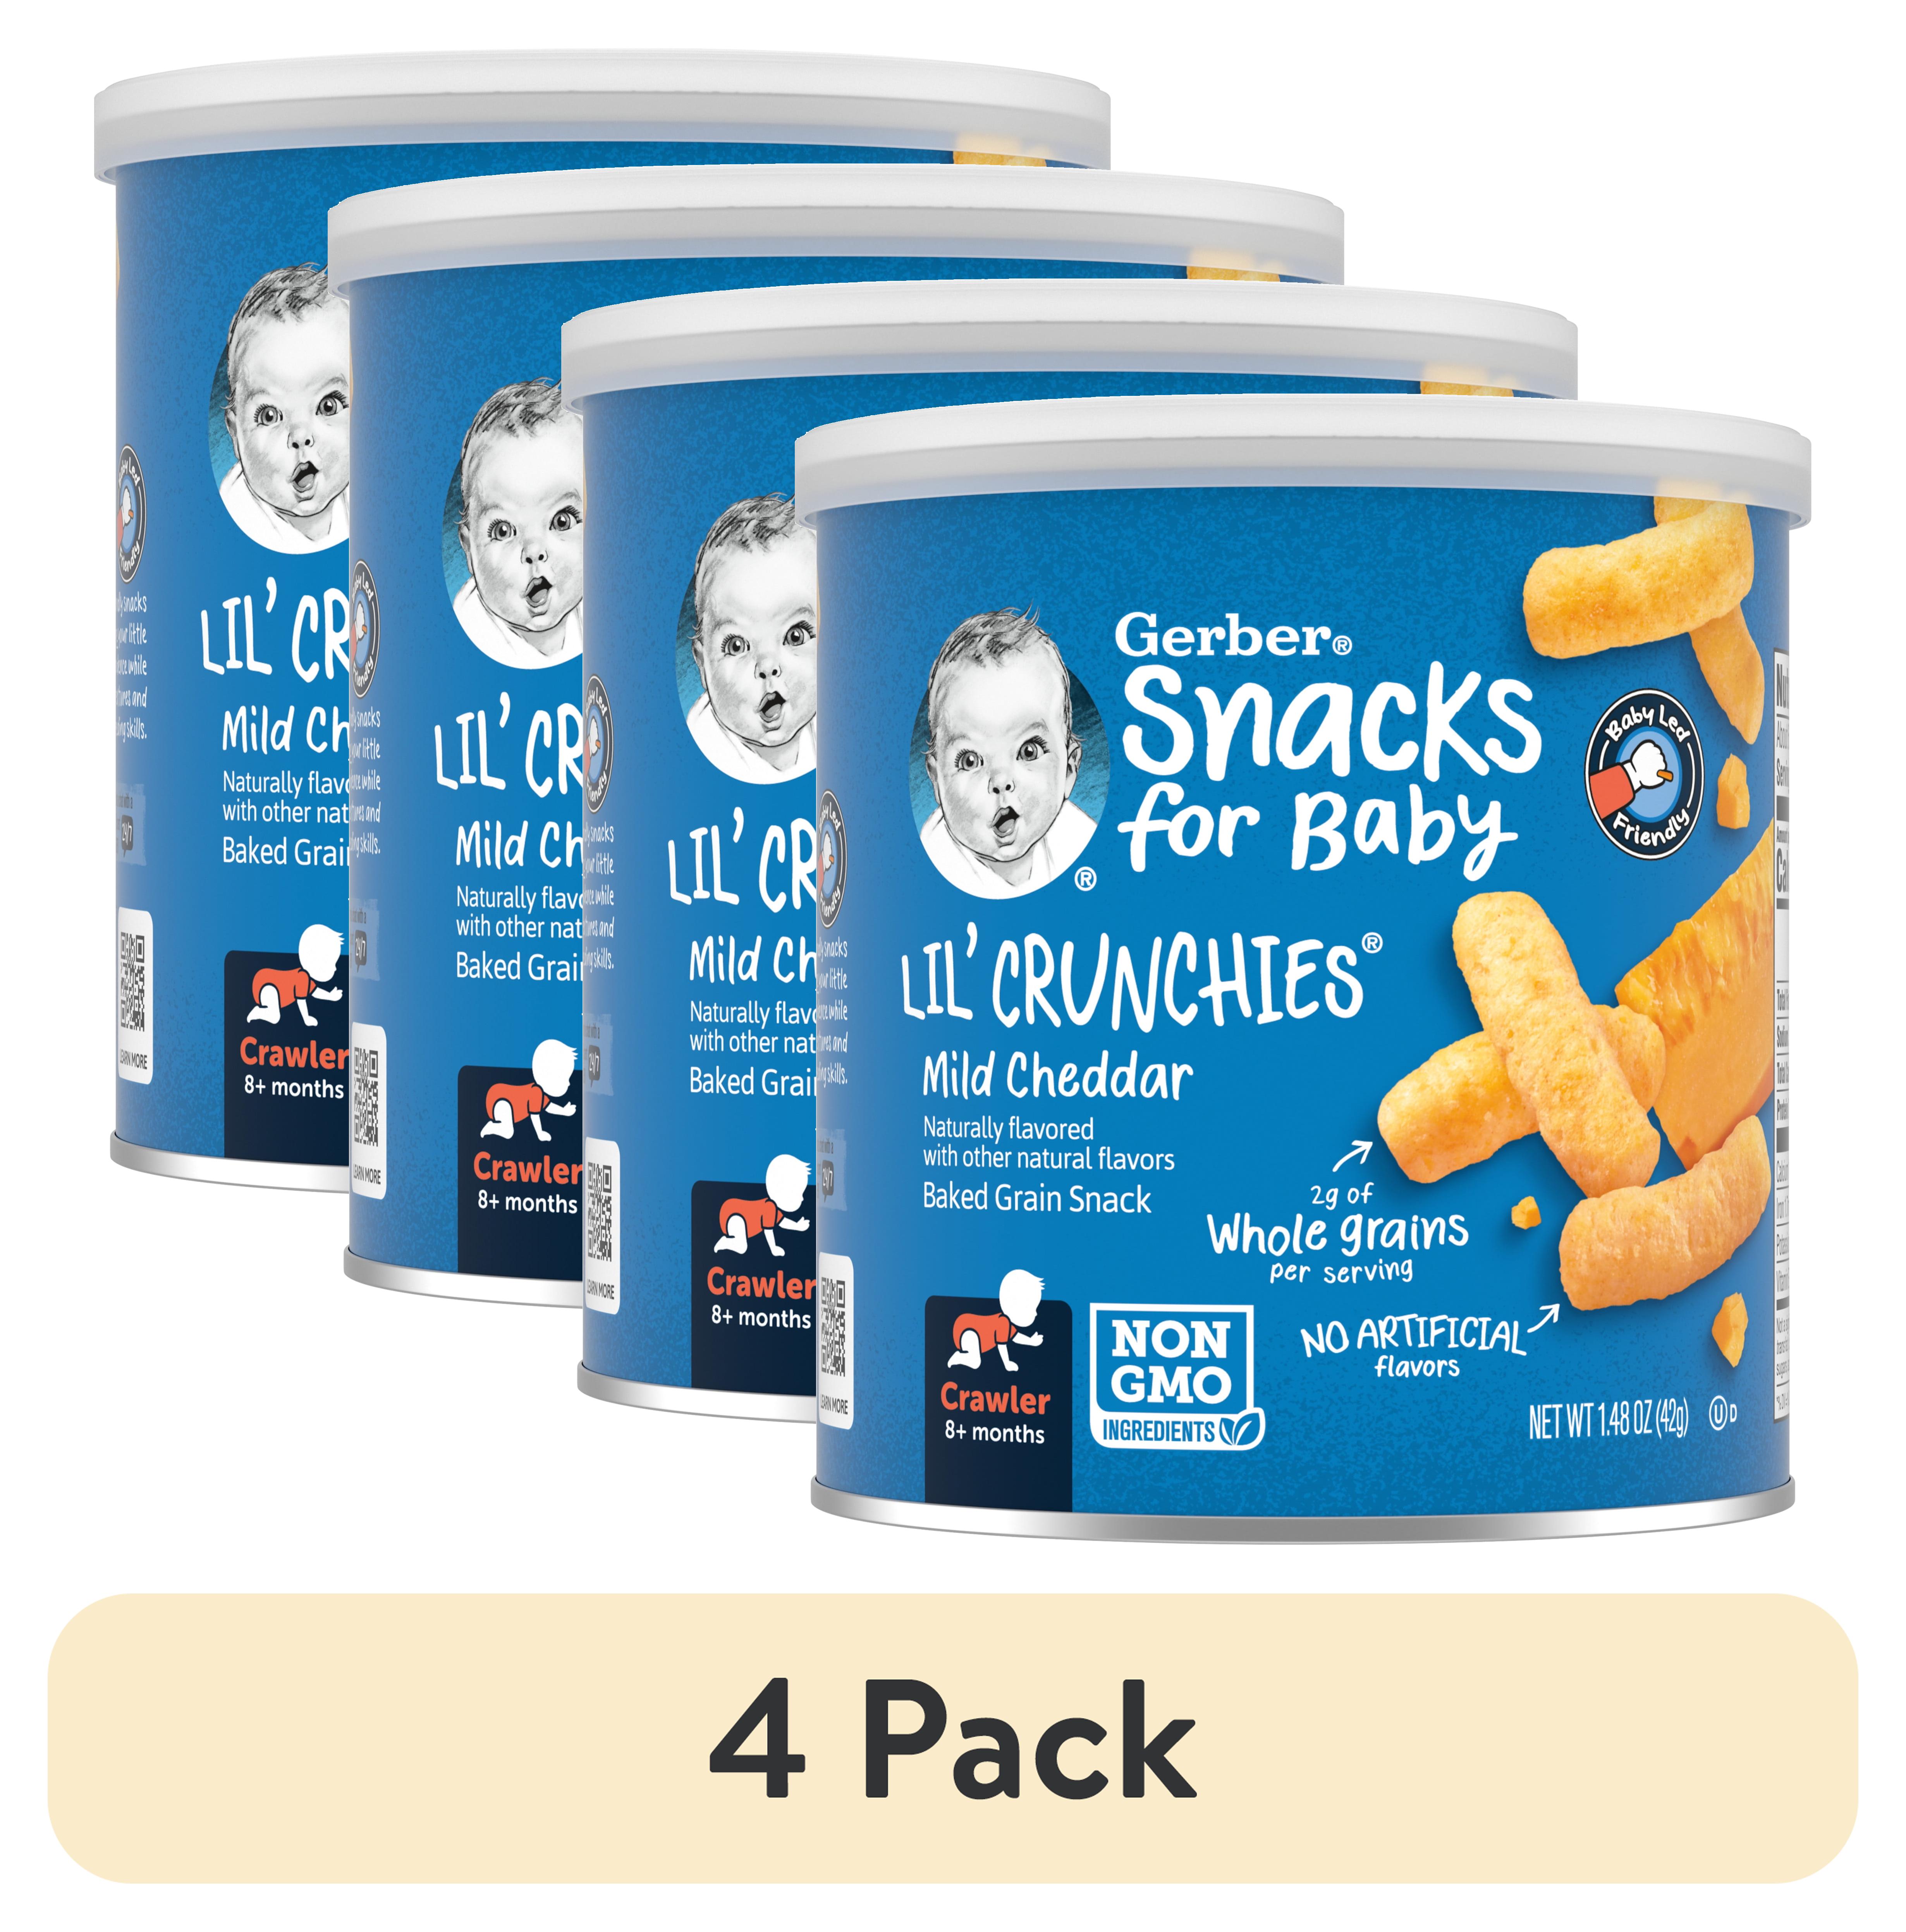 (4 pack) Gerber Snacks for Baby Lil Crunchies Mild Cheddar Baked Corn, 1.48 oz Canister - image 1 of 8